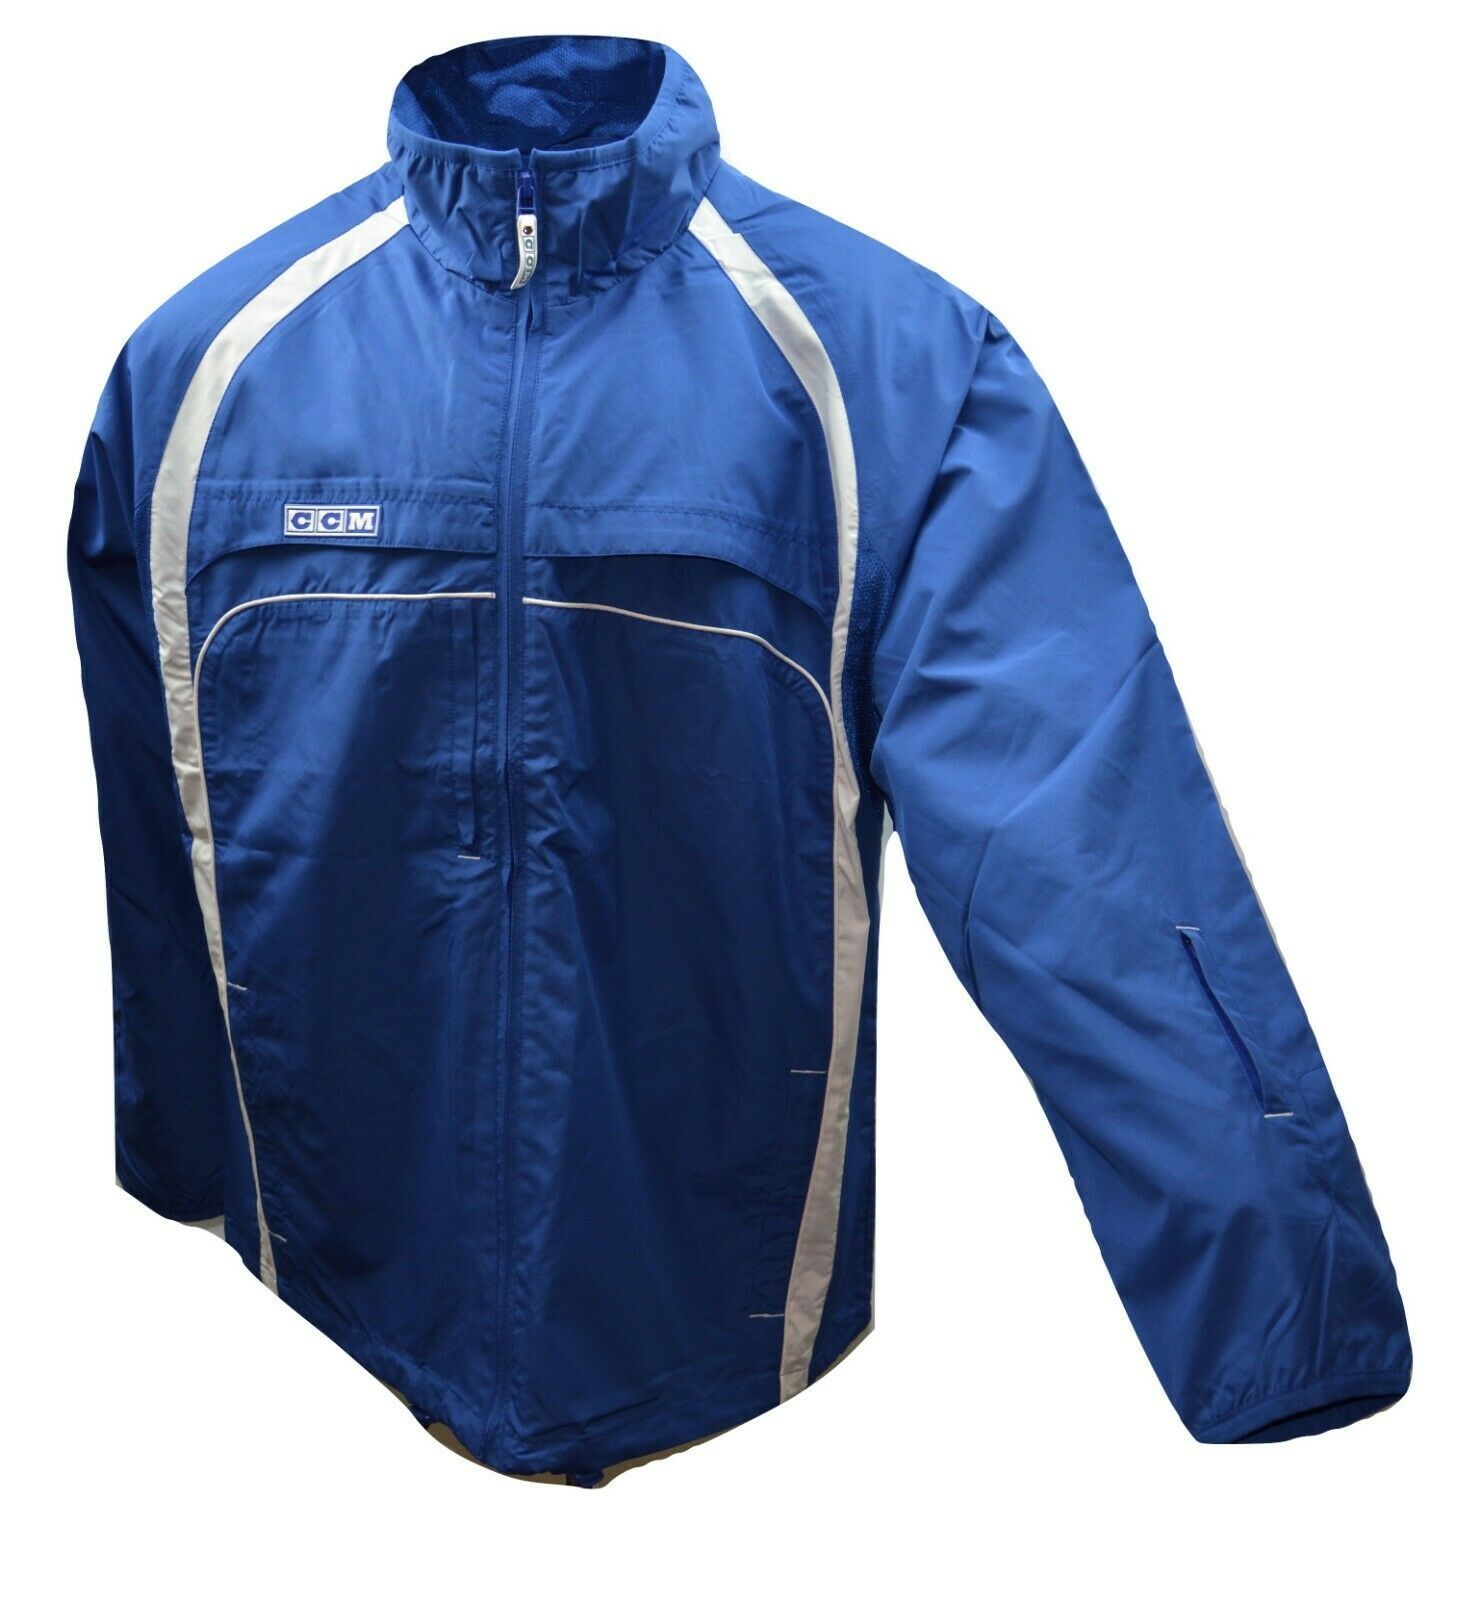 CCM 4660 Royal Blue Pro Skate Hockey Jacket XL - Coats, Jackets & Vests